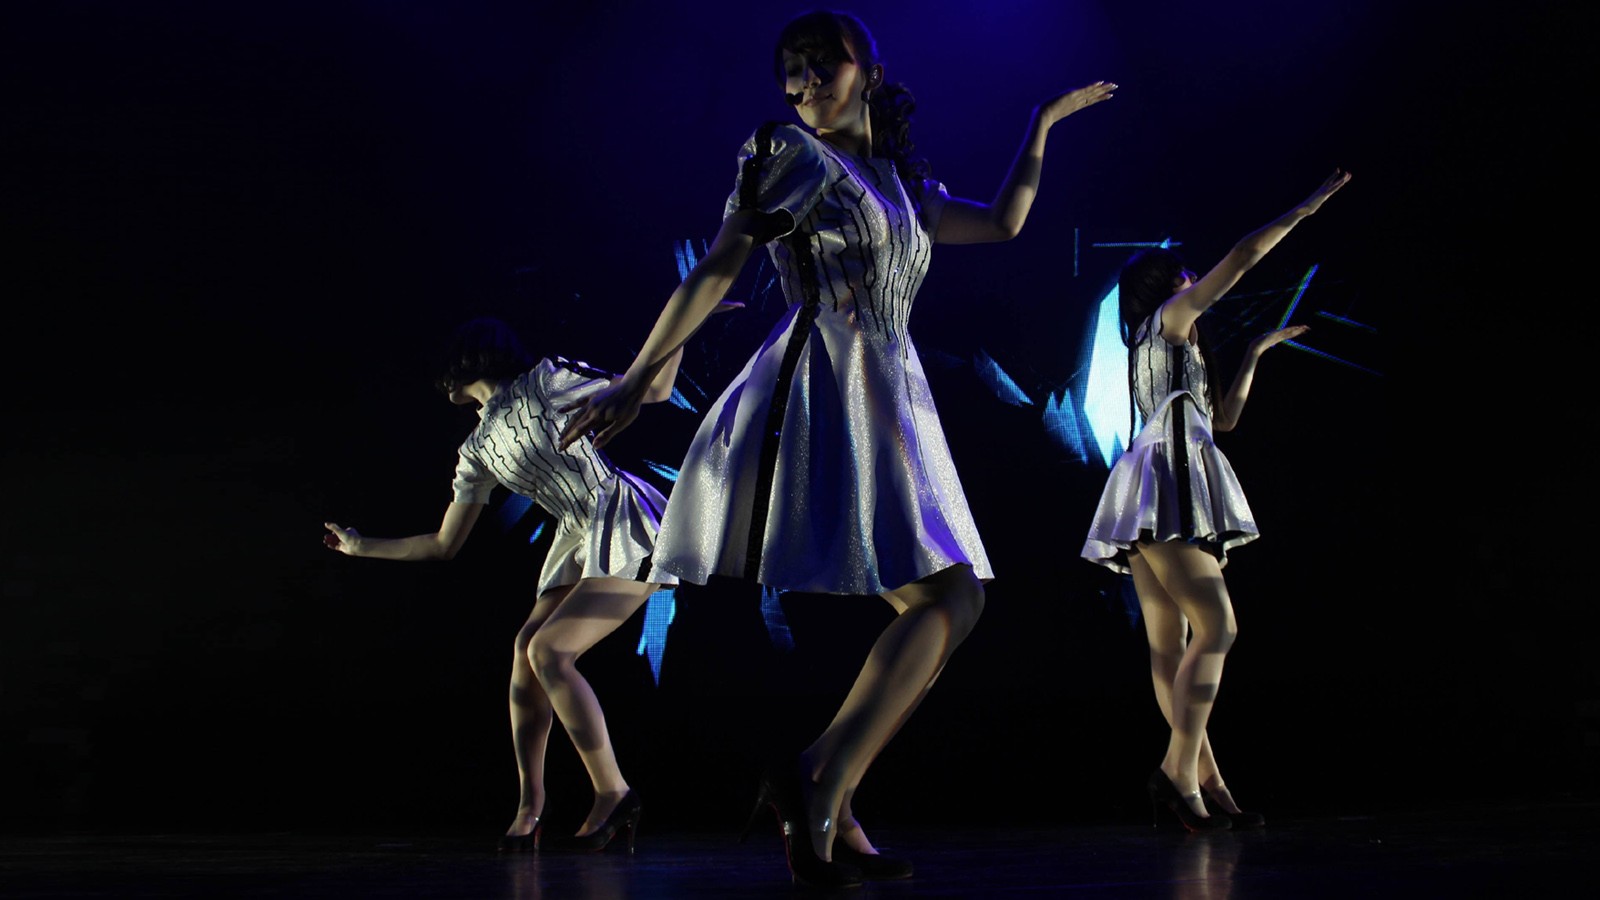 Perfume Band Perfume Band J Pop Concerts Costumes Dancing Hologram 1600x900